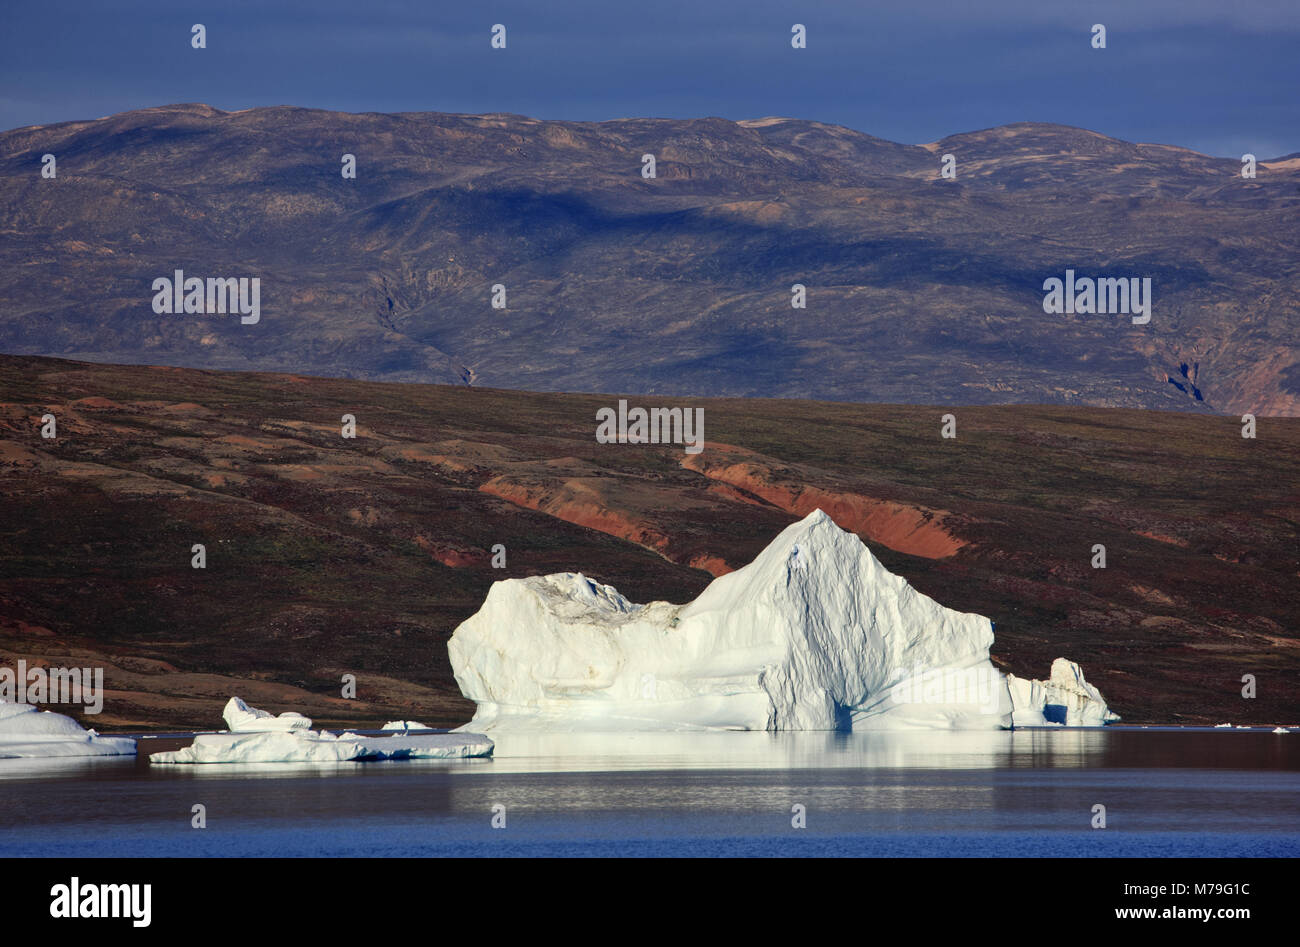 Greenland, East Greenland, Scoresbysund, icebergs, coastal scenery, mountain landscape, Stock Photo